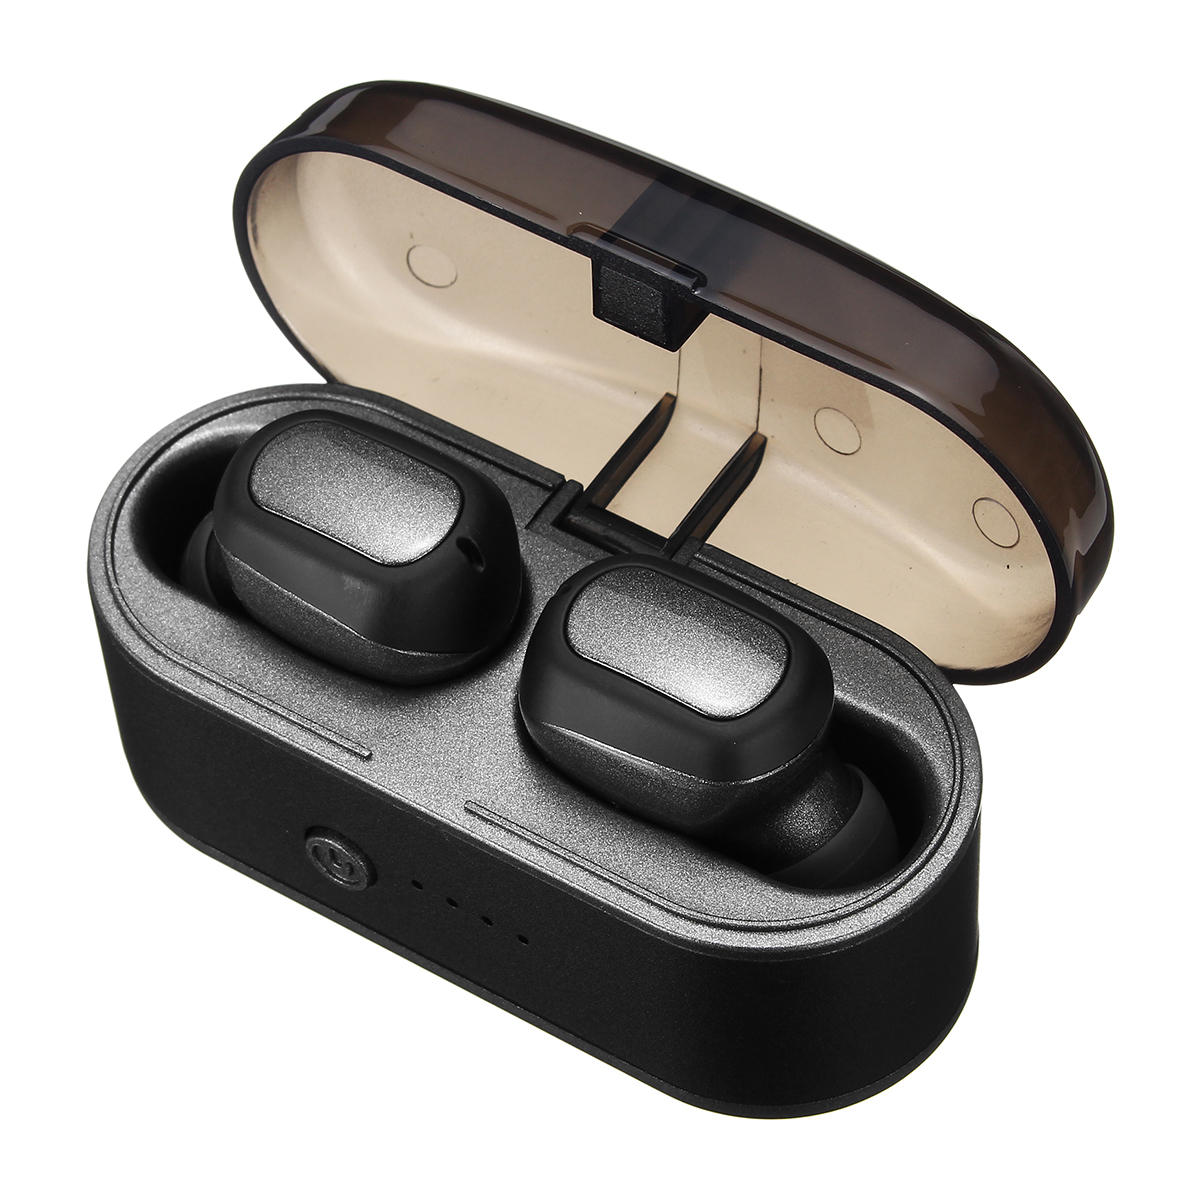 [bluetooth 5.0] TWS Mini Wireless Earbuds Earphone CVC 8.0 Noise Cancelling Bass Stereo IPX5 Waterproof Headphones